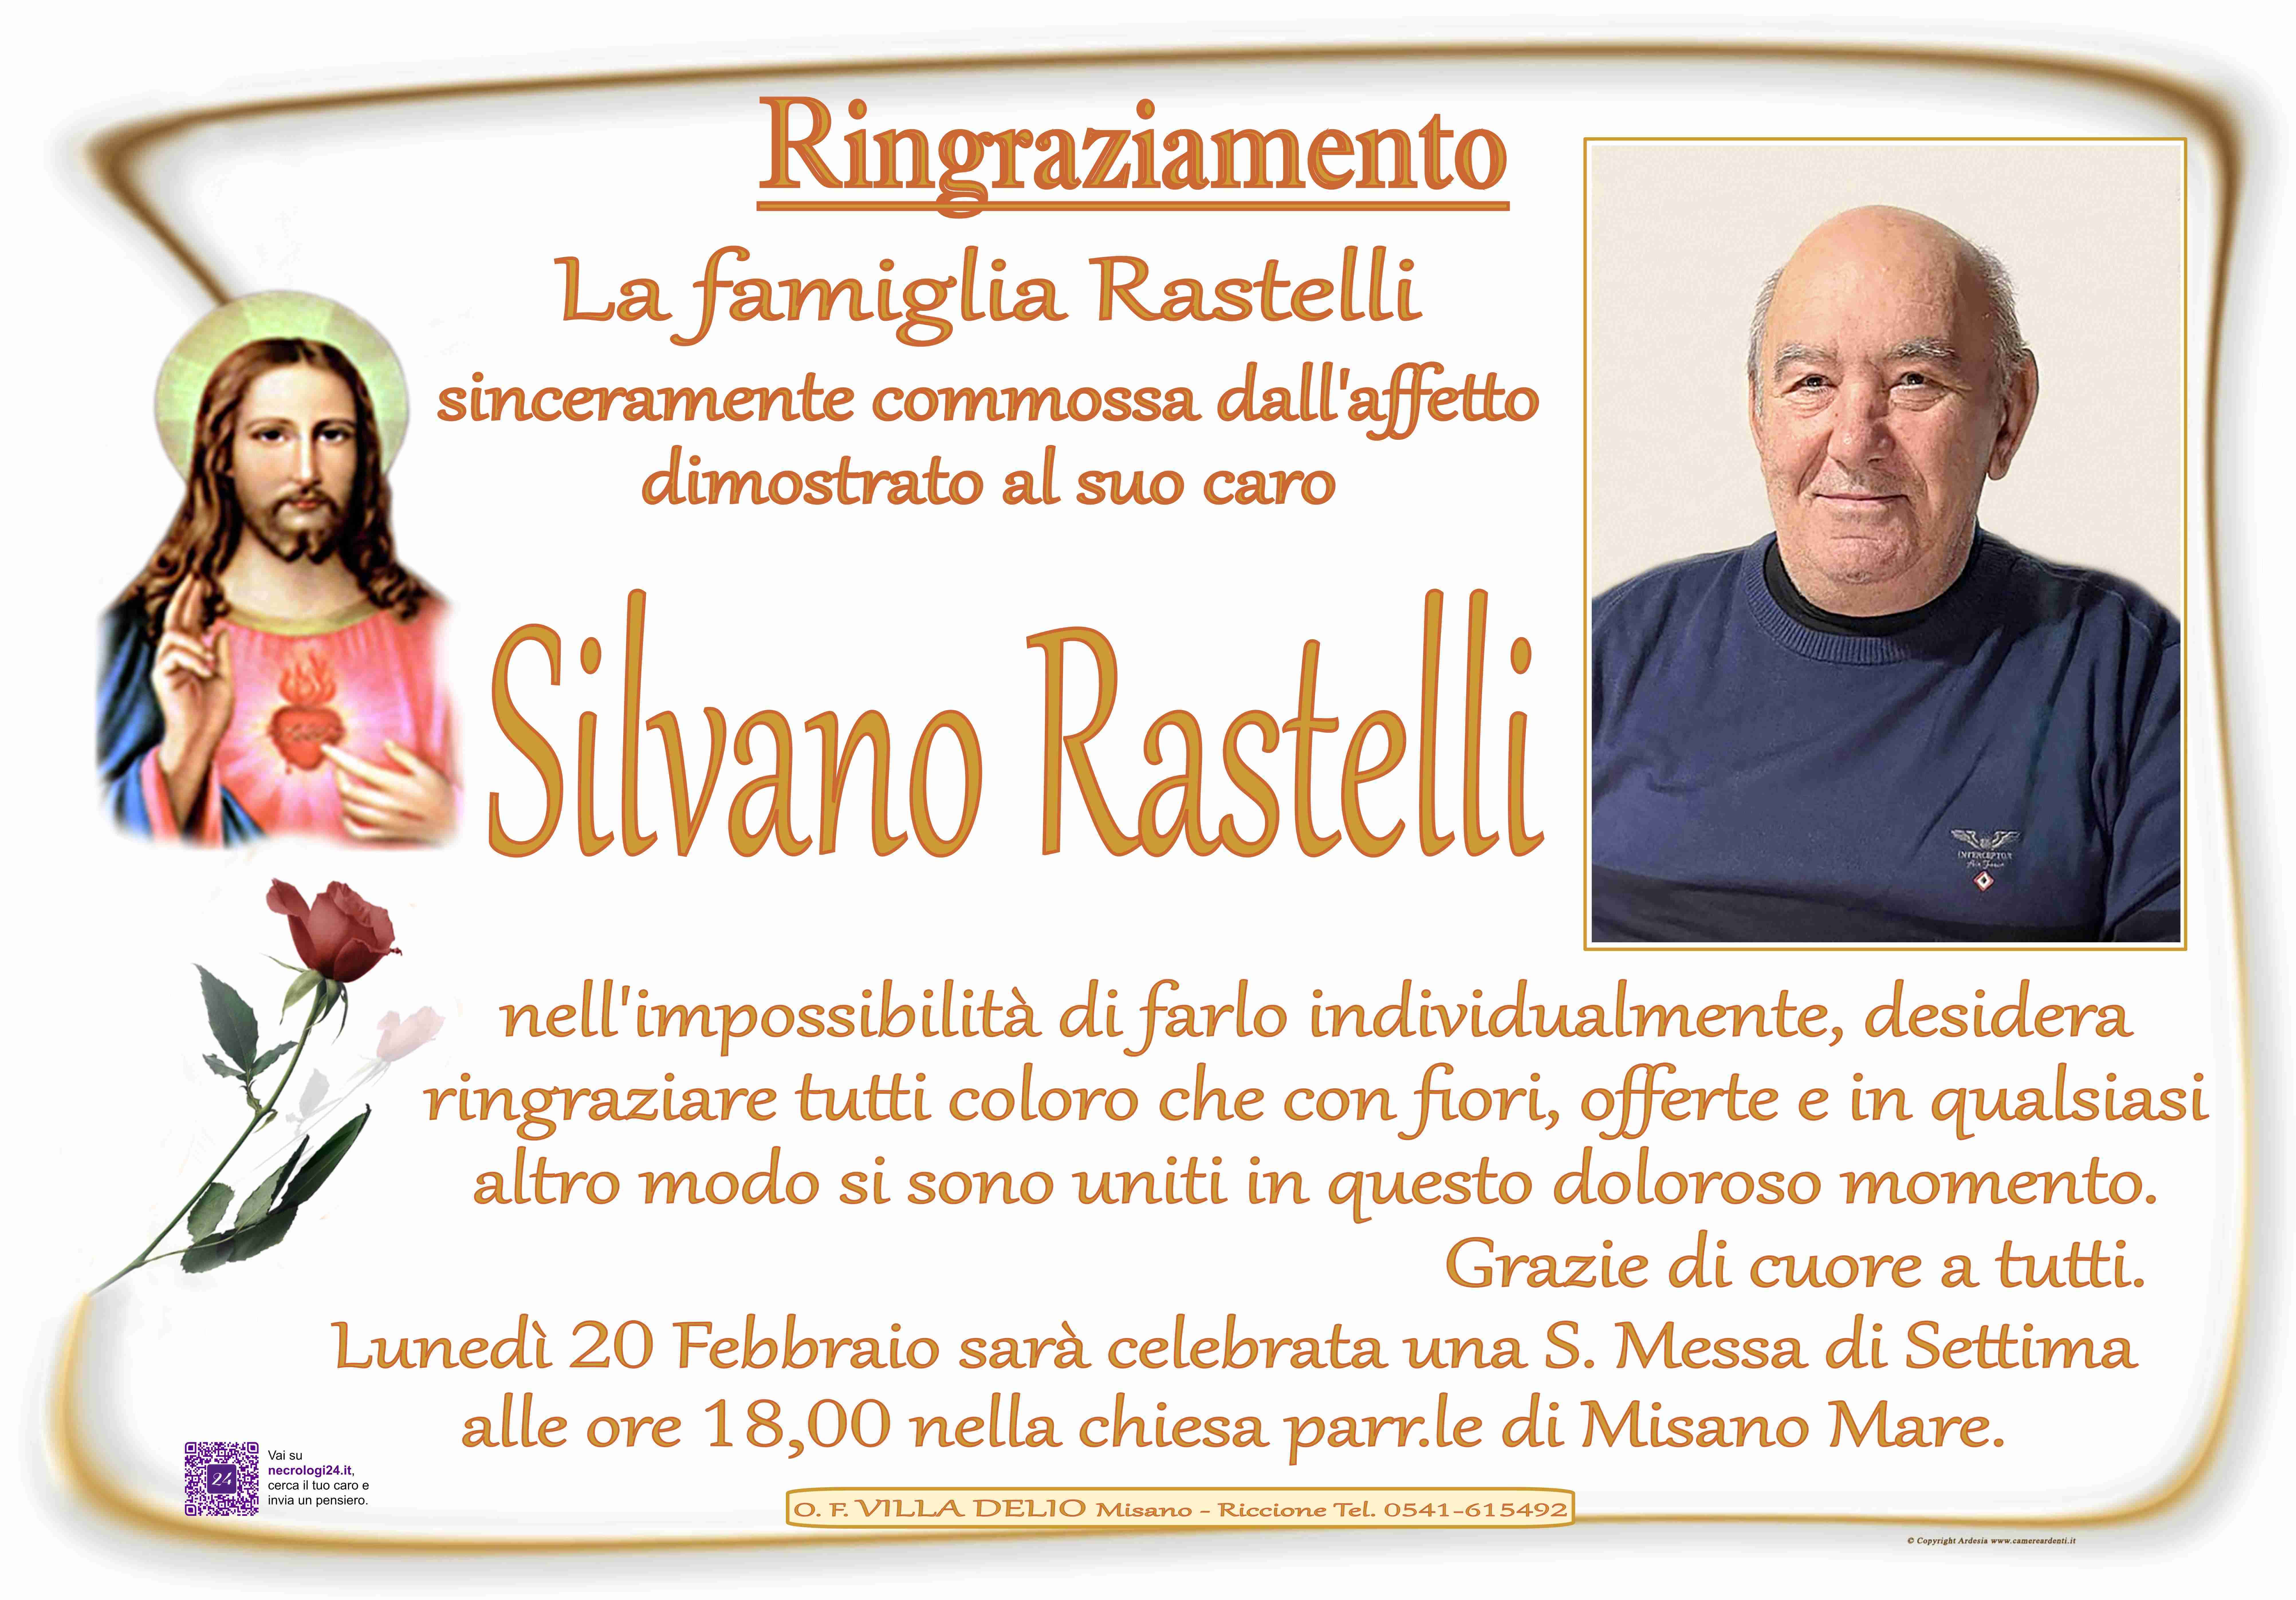 Silvano Rastelli